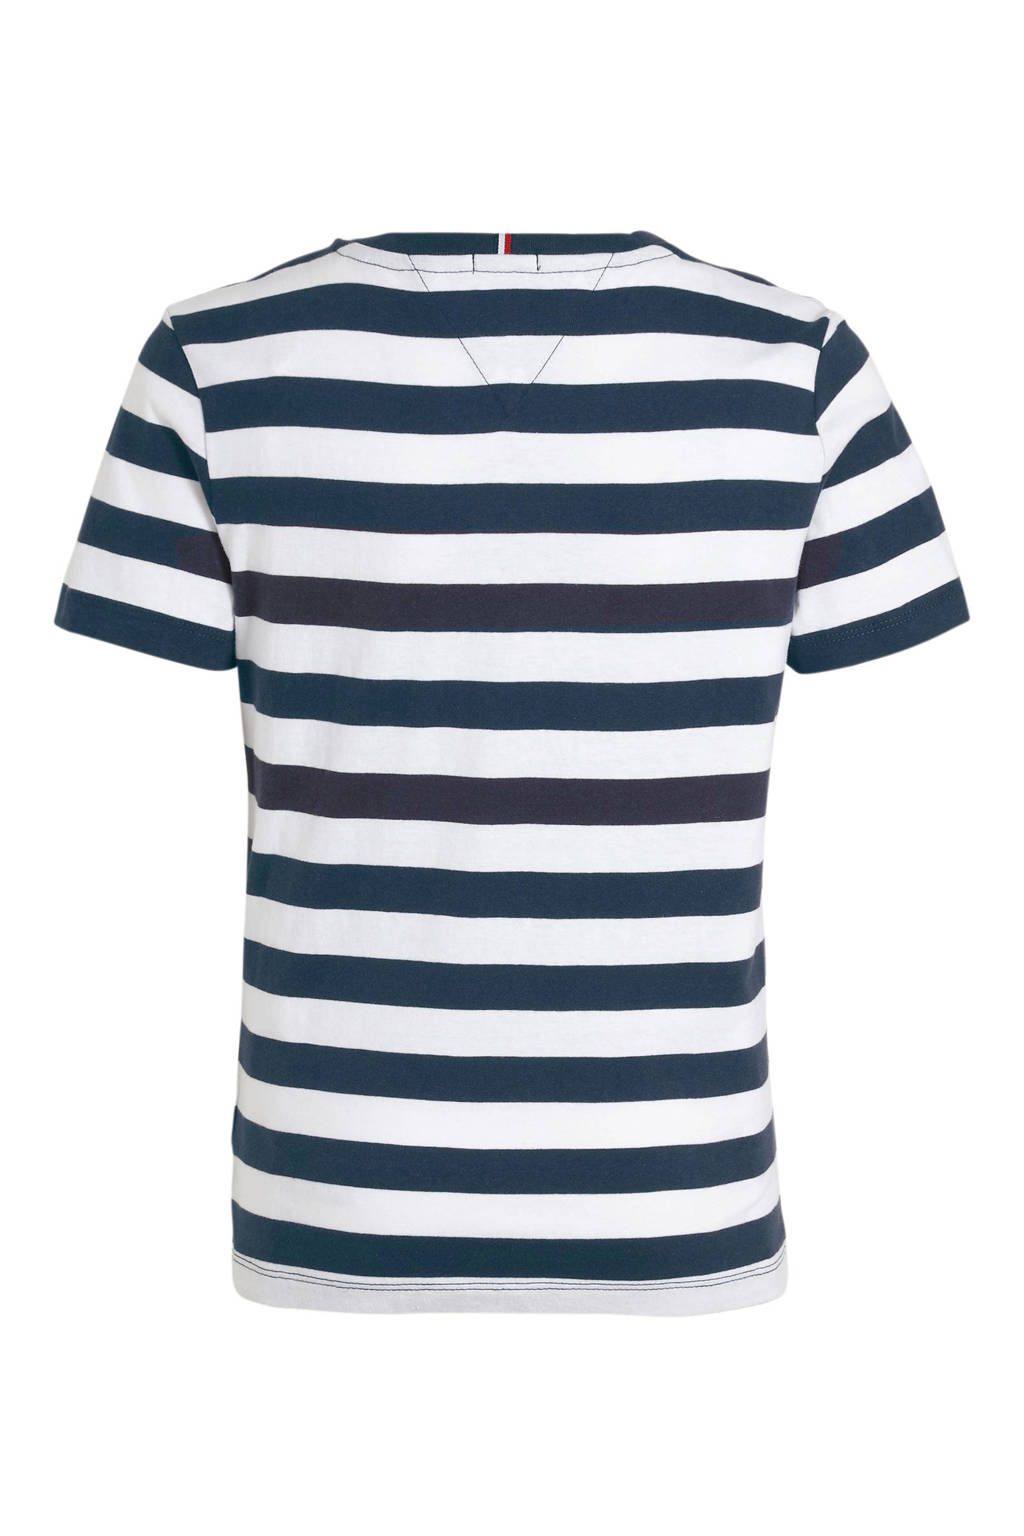 Goede Tommy Hilfiger gestreept T-shirt blauw/wit/rood | wehkamp RH-23